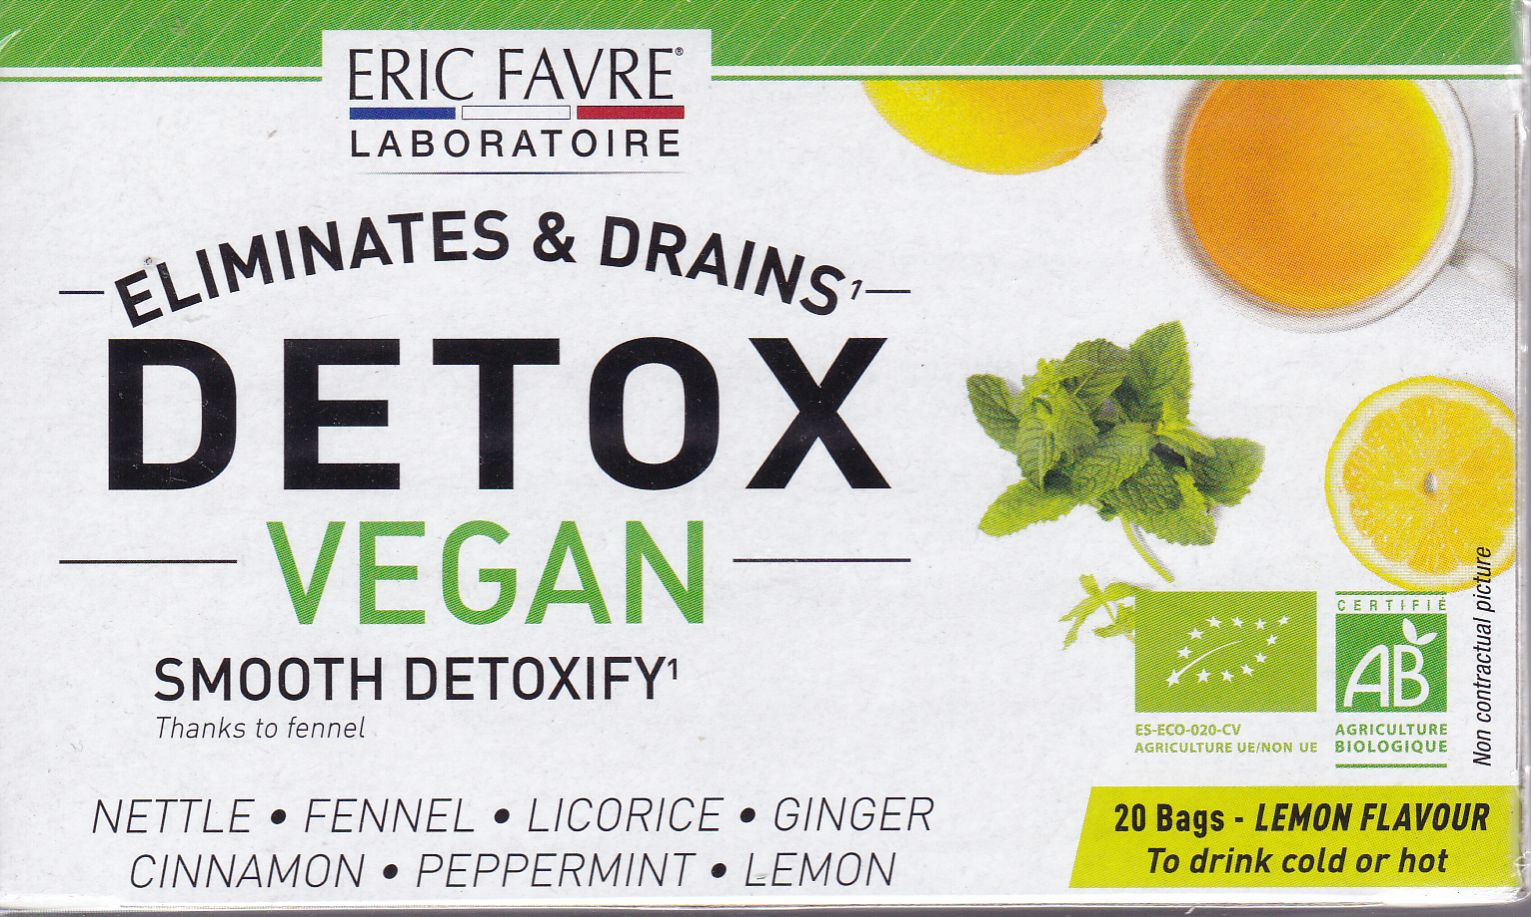 Eric Favre infusion Detox Vegan 20 sachets 30g